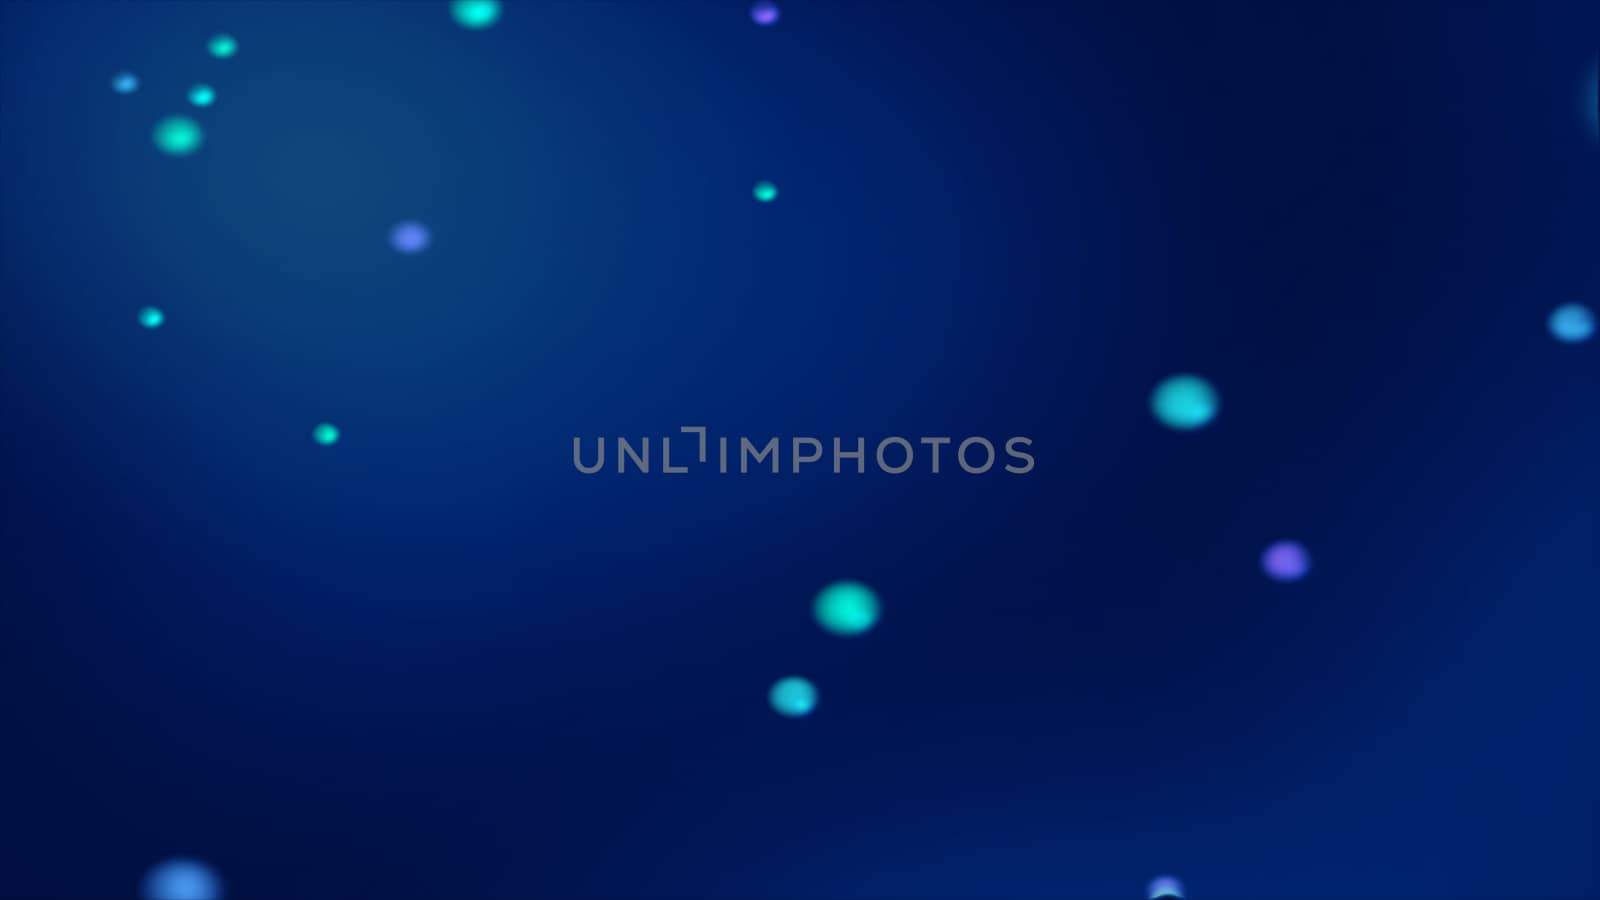 Dark blue bokeh background with blurred glowing bluish spheres by Photochowk